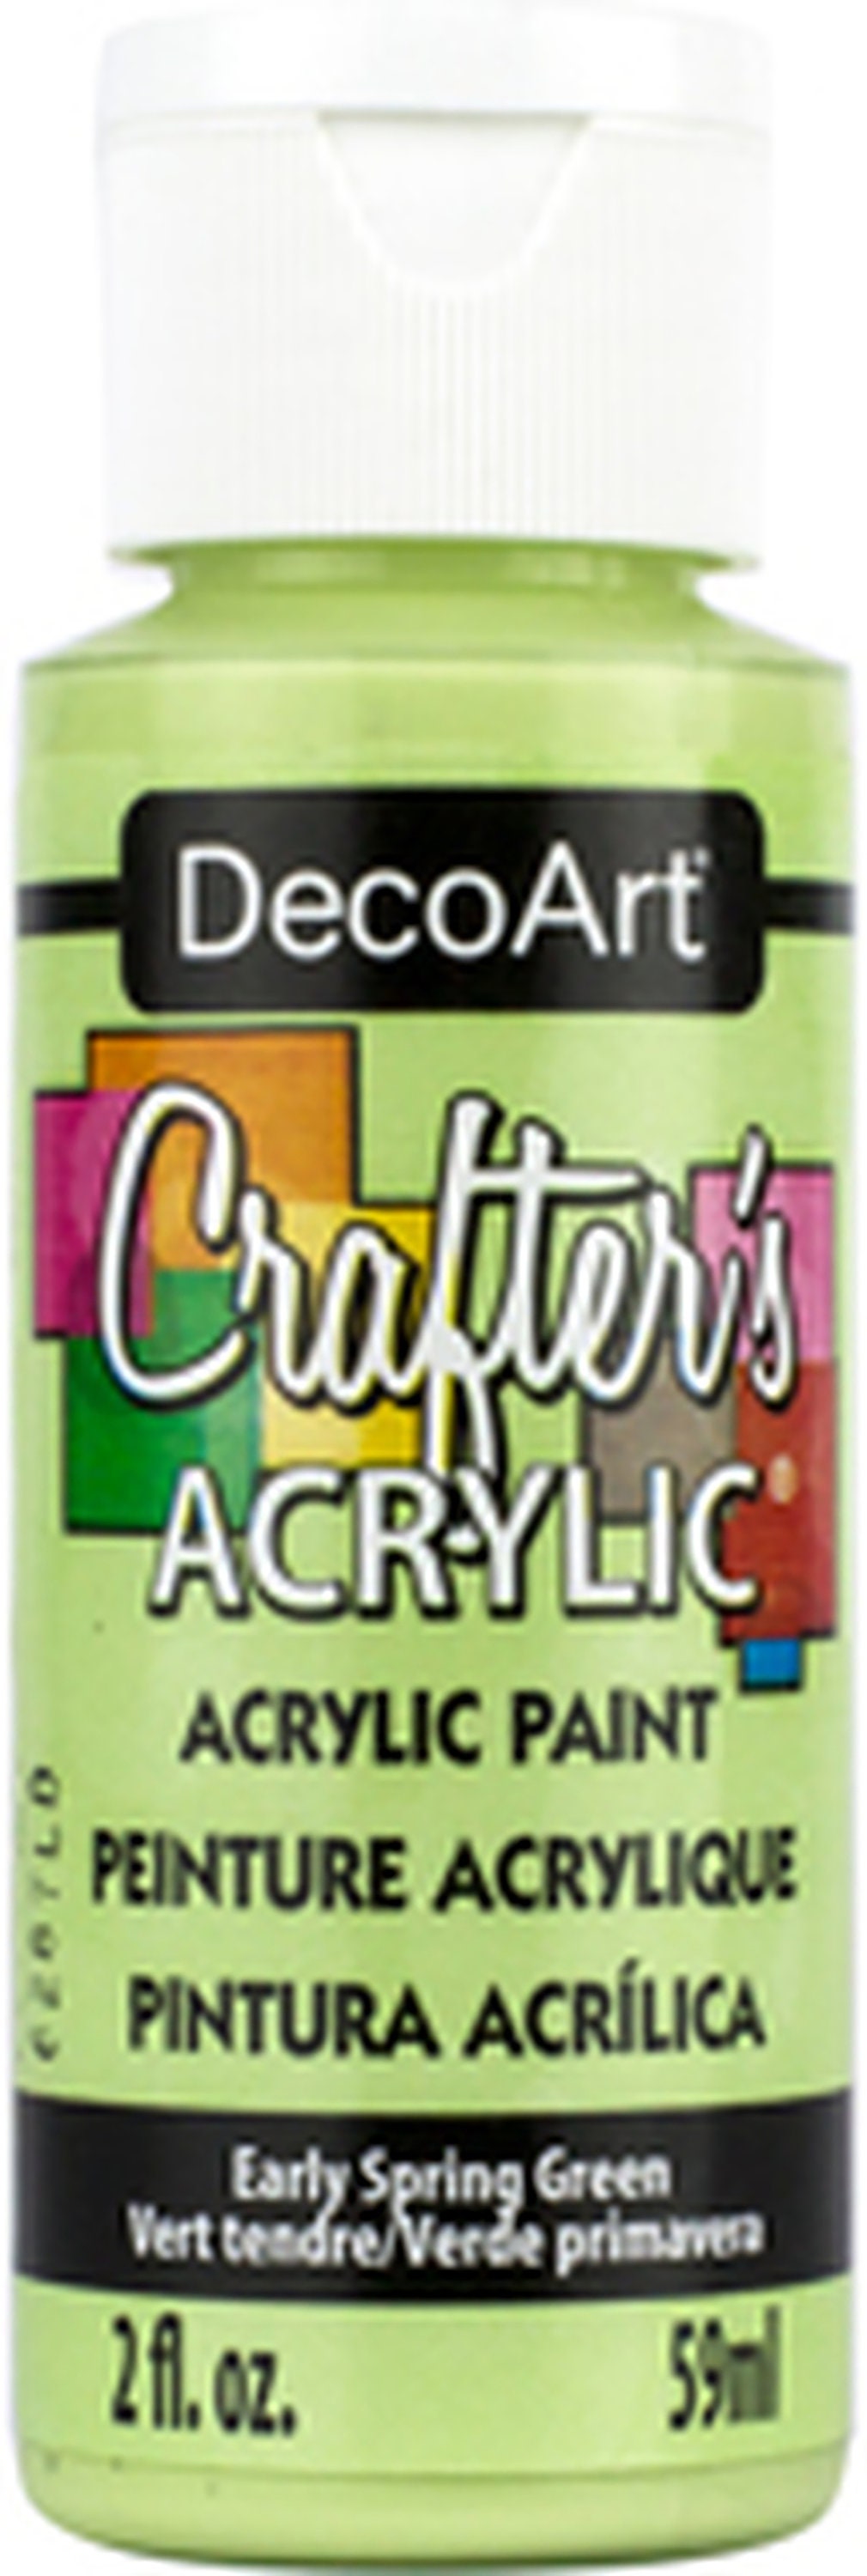 DecoArt Acrylic Paint Lamp Black 2 oz